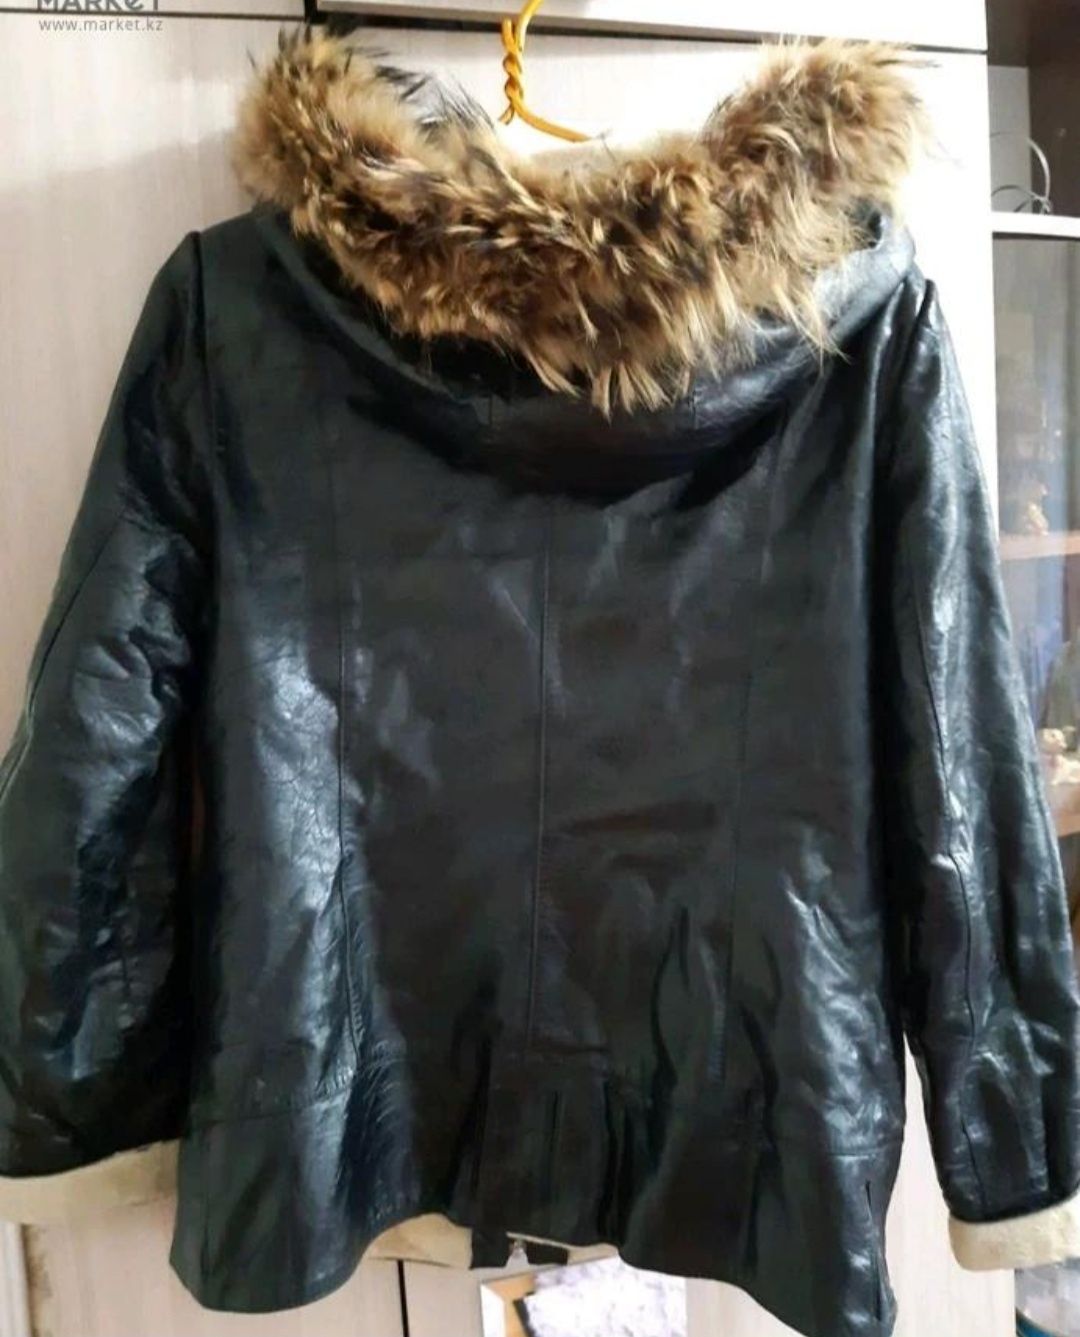 Срочно продаю тёплую кожаную зимнюю куртку